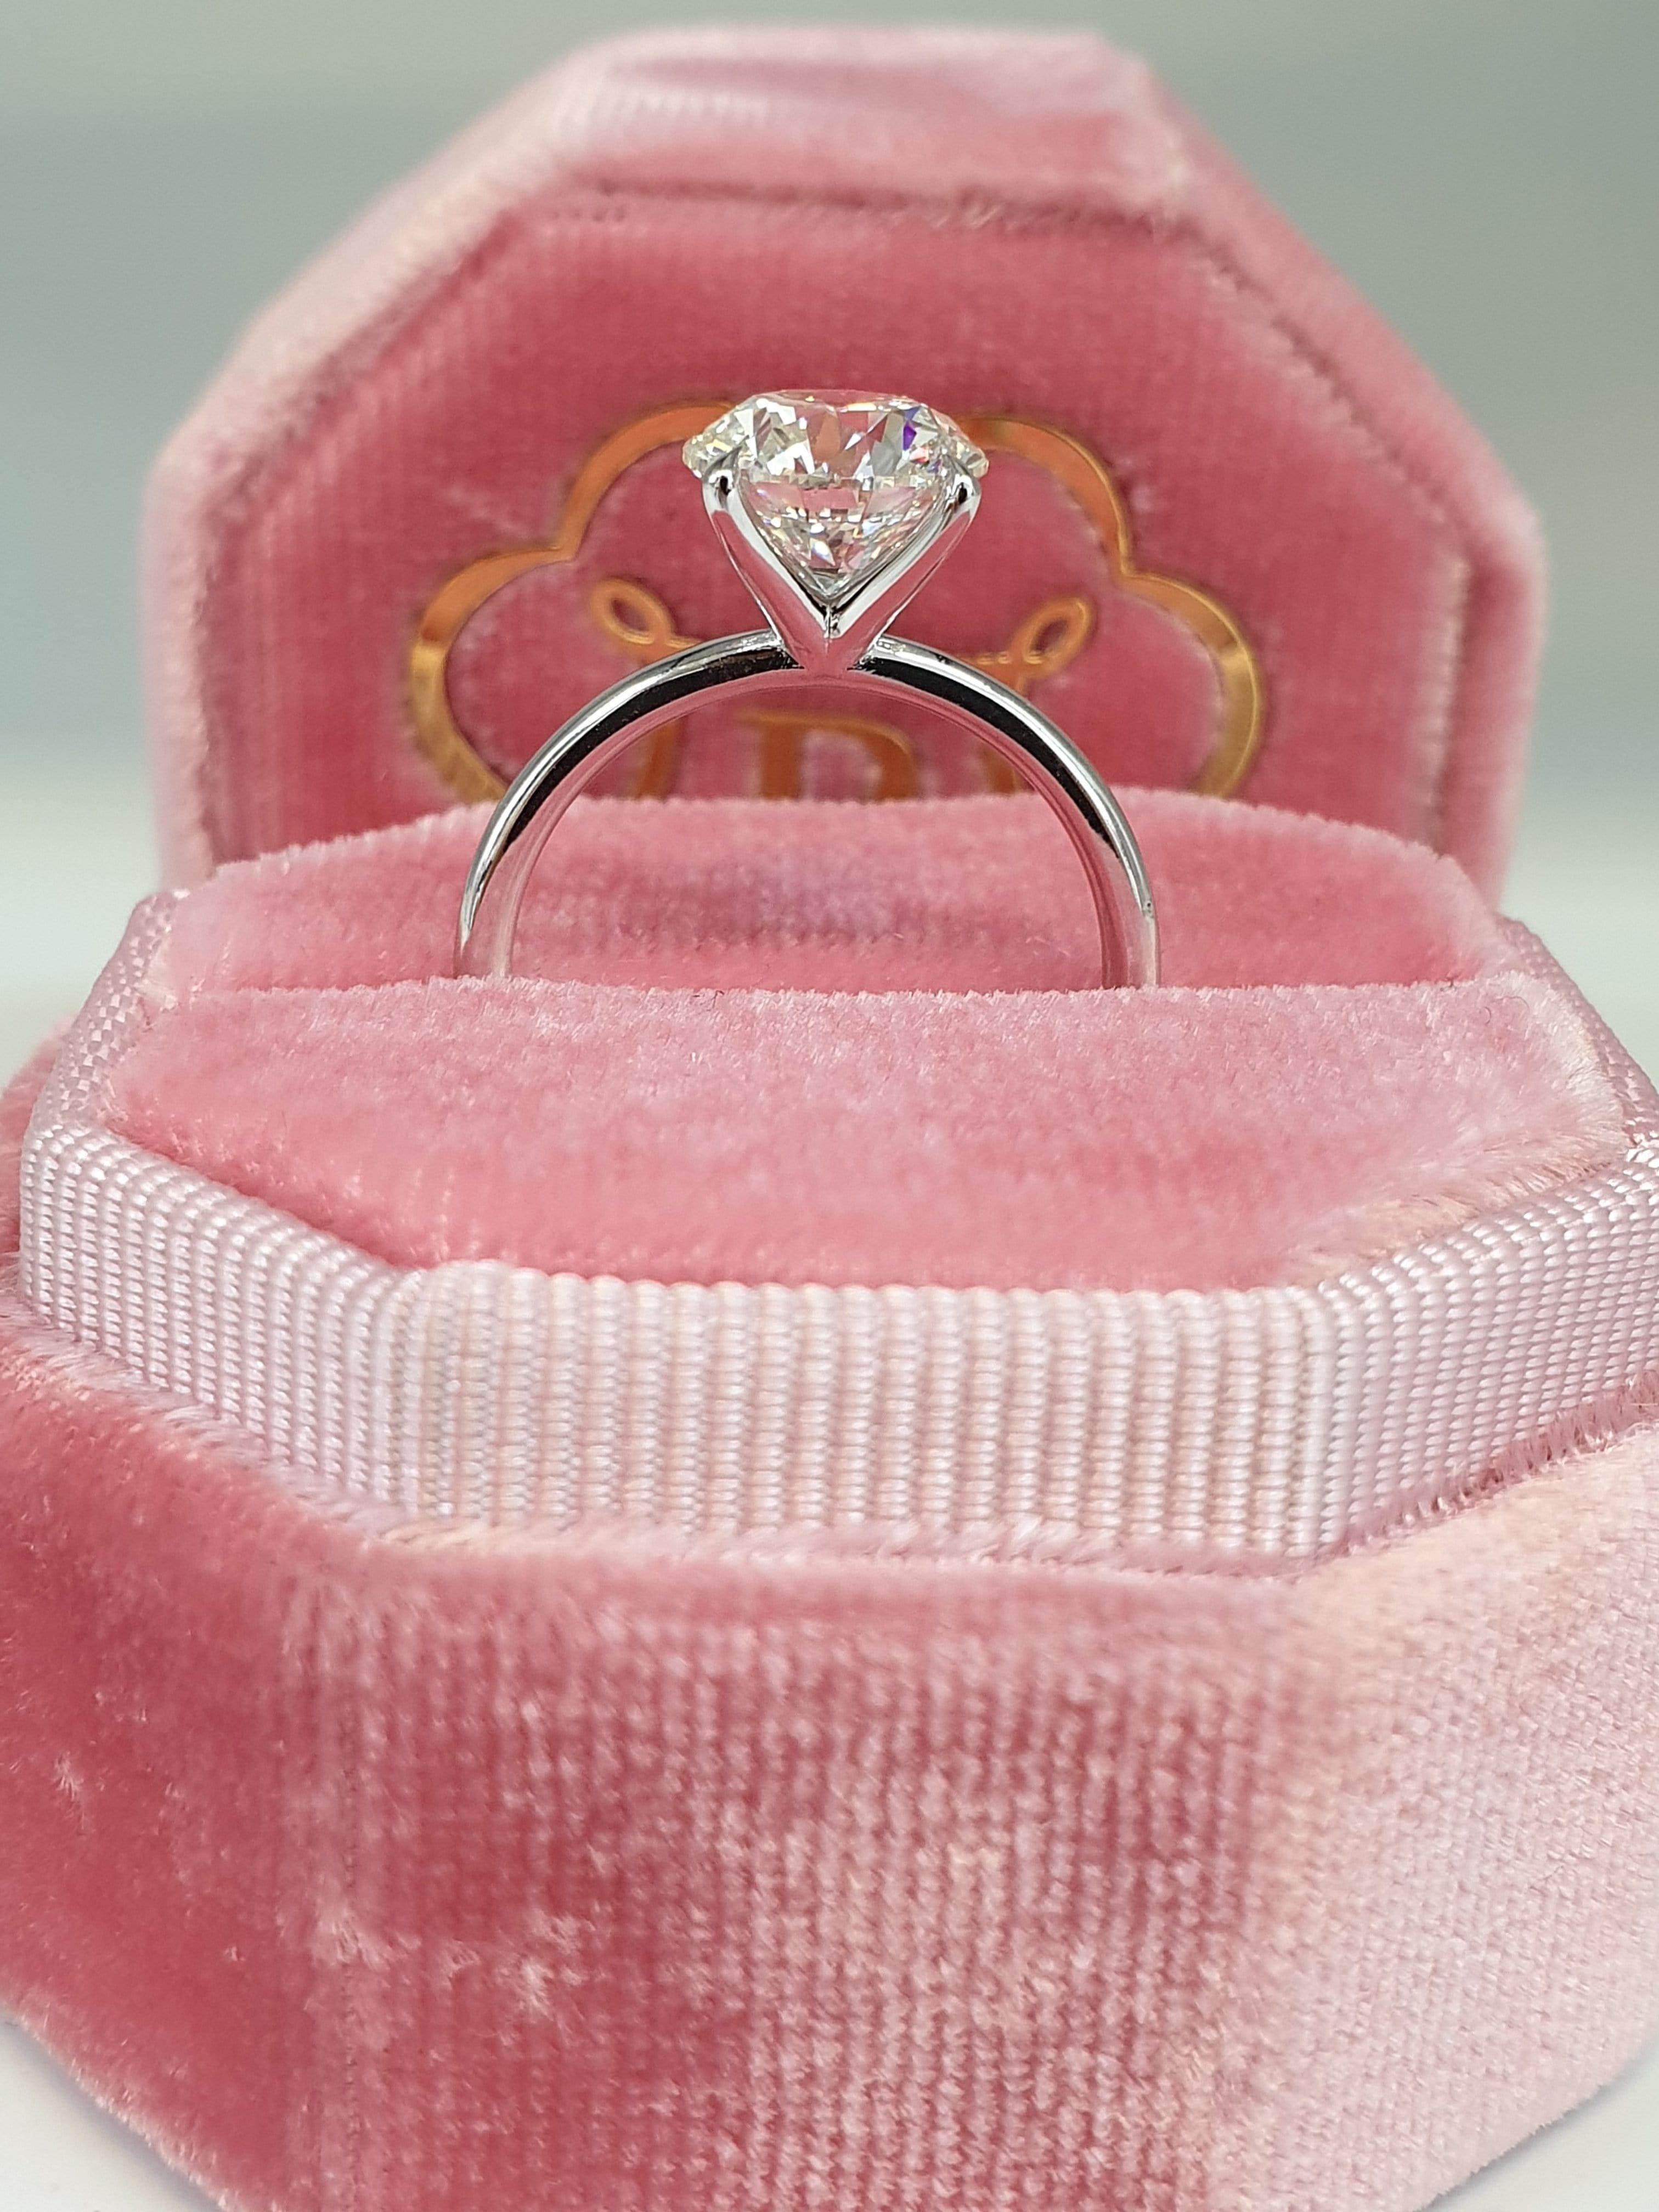 Shir: two carat round brilliant diamond ring